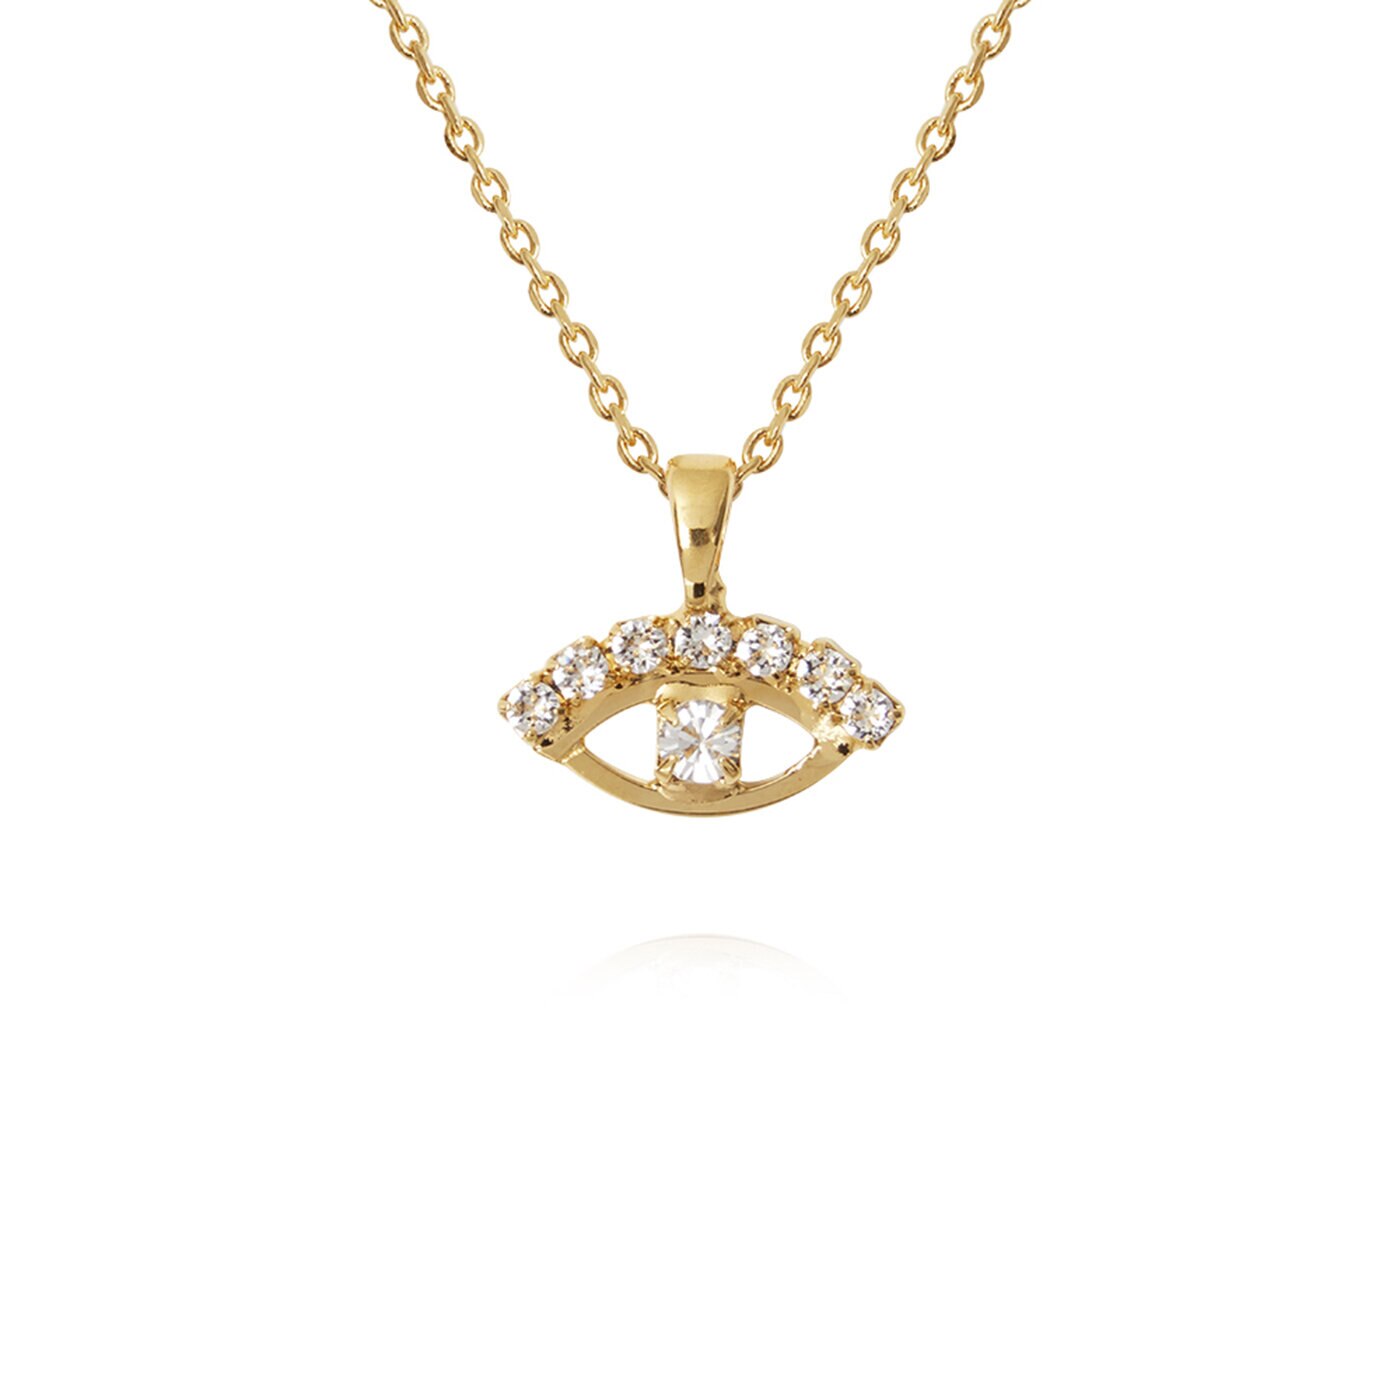 Petite Greek Eye Necklace Gold / Crystal